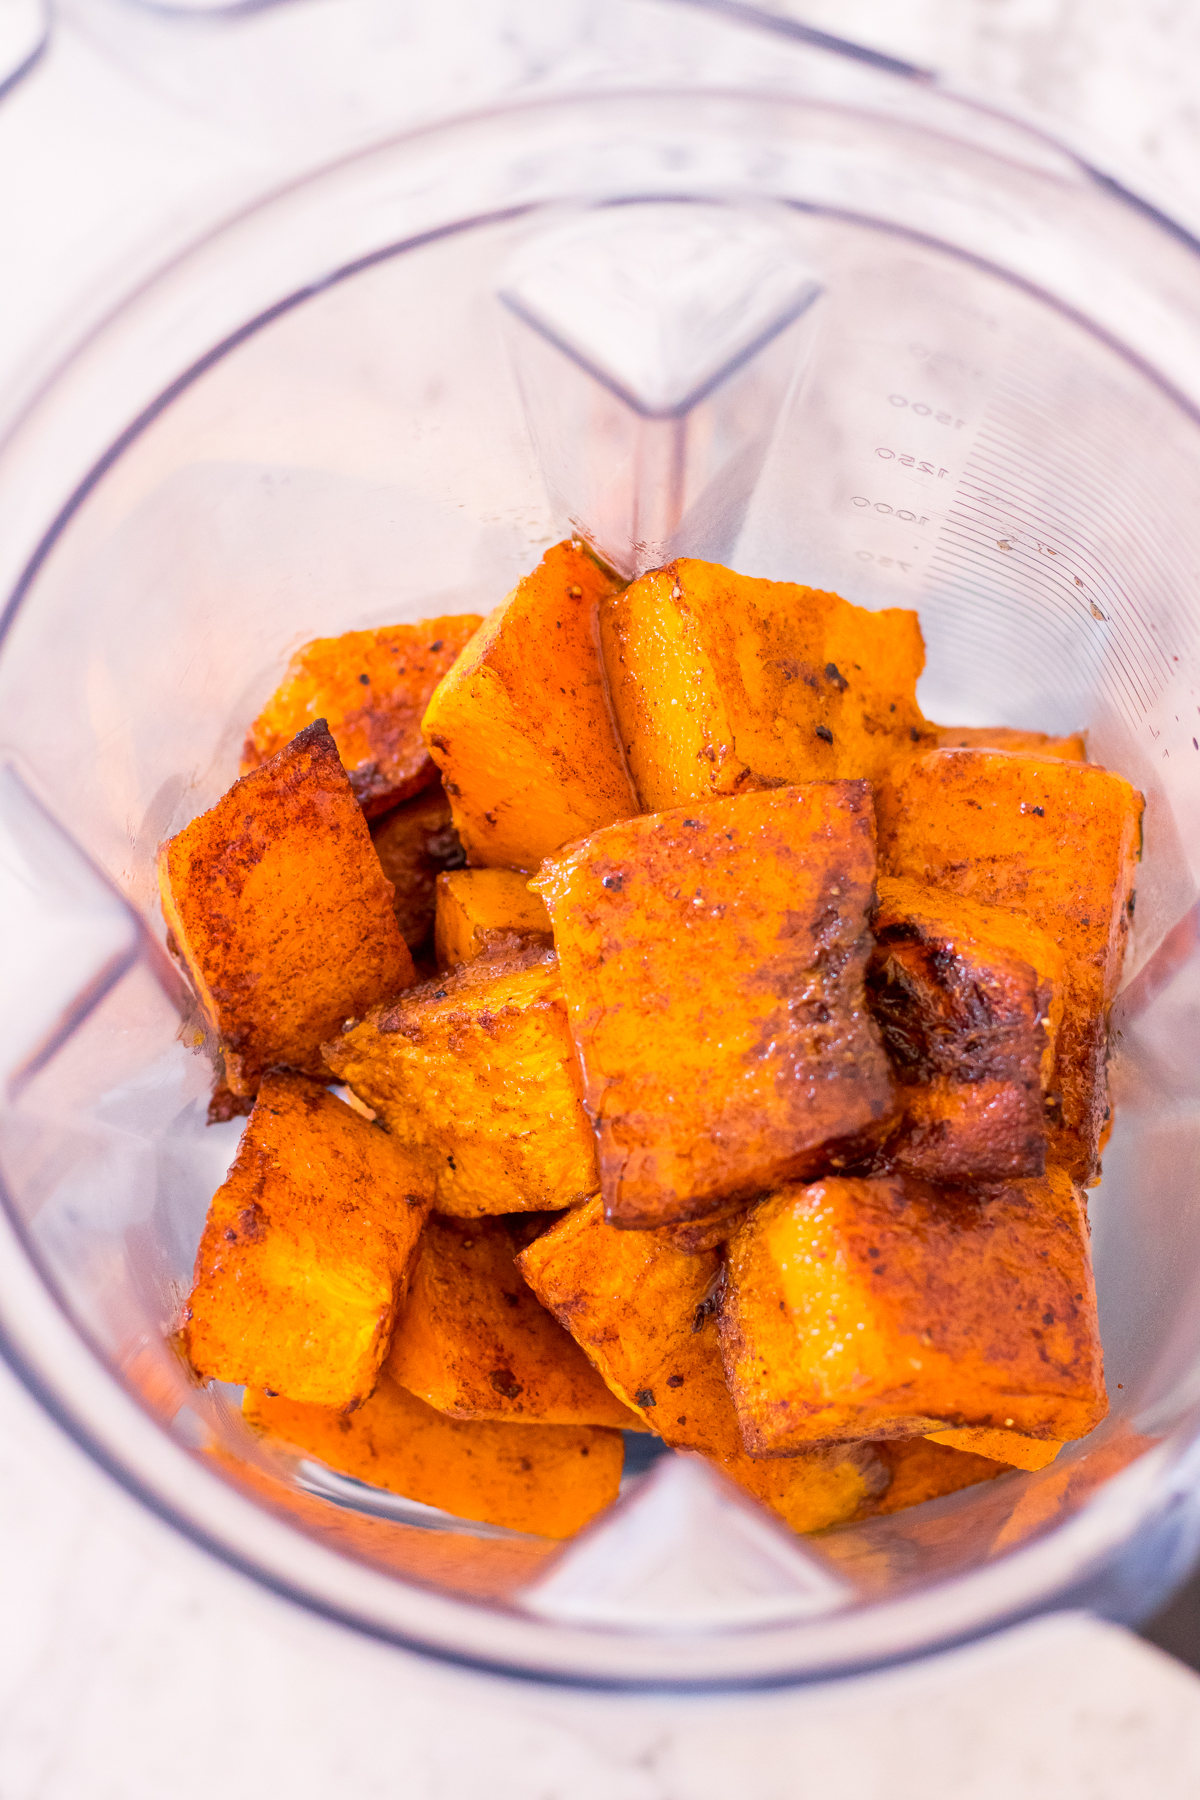 Image of roasted pumpkin chunks in a blender jug.